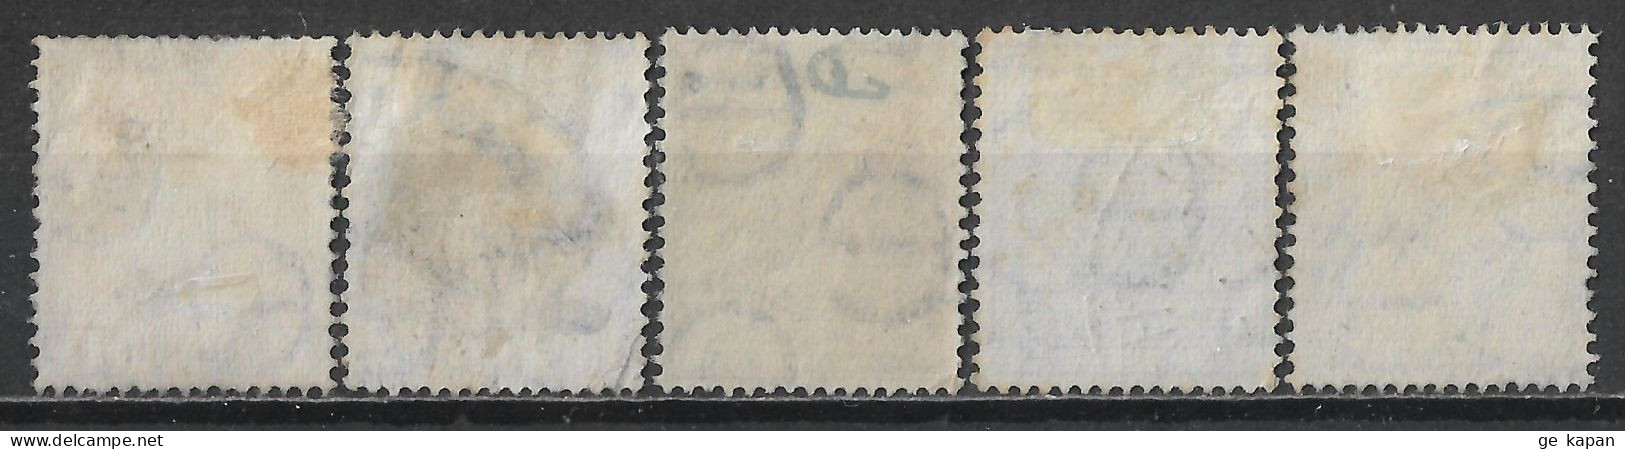 1940-1941 IRELAND SET OF 5 USED STAMPS (Michel # 72A,74A,75A,76AI,77A) CV €1.80 - Gebruikt